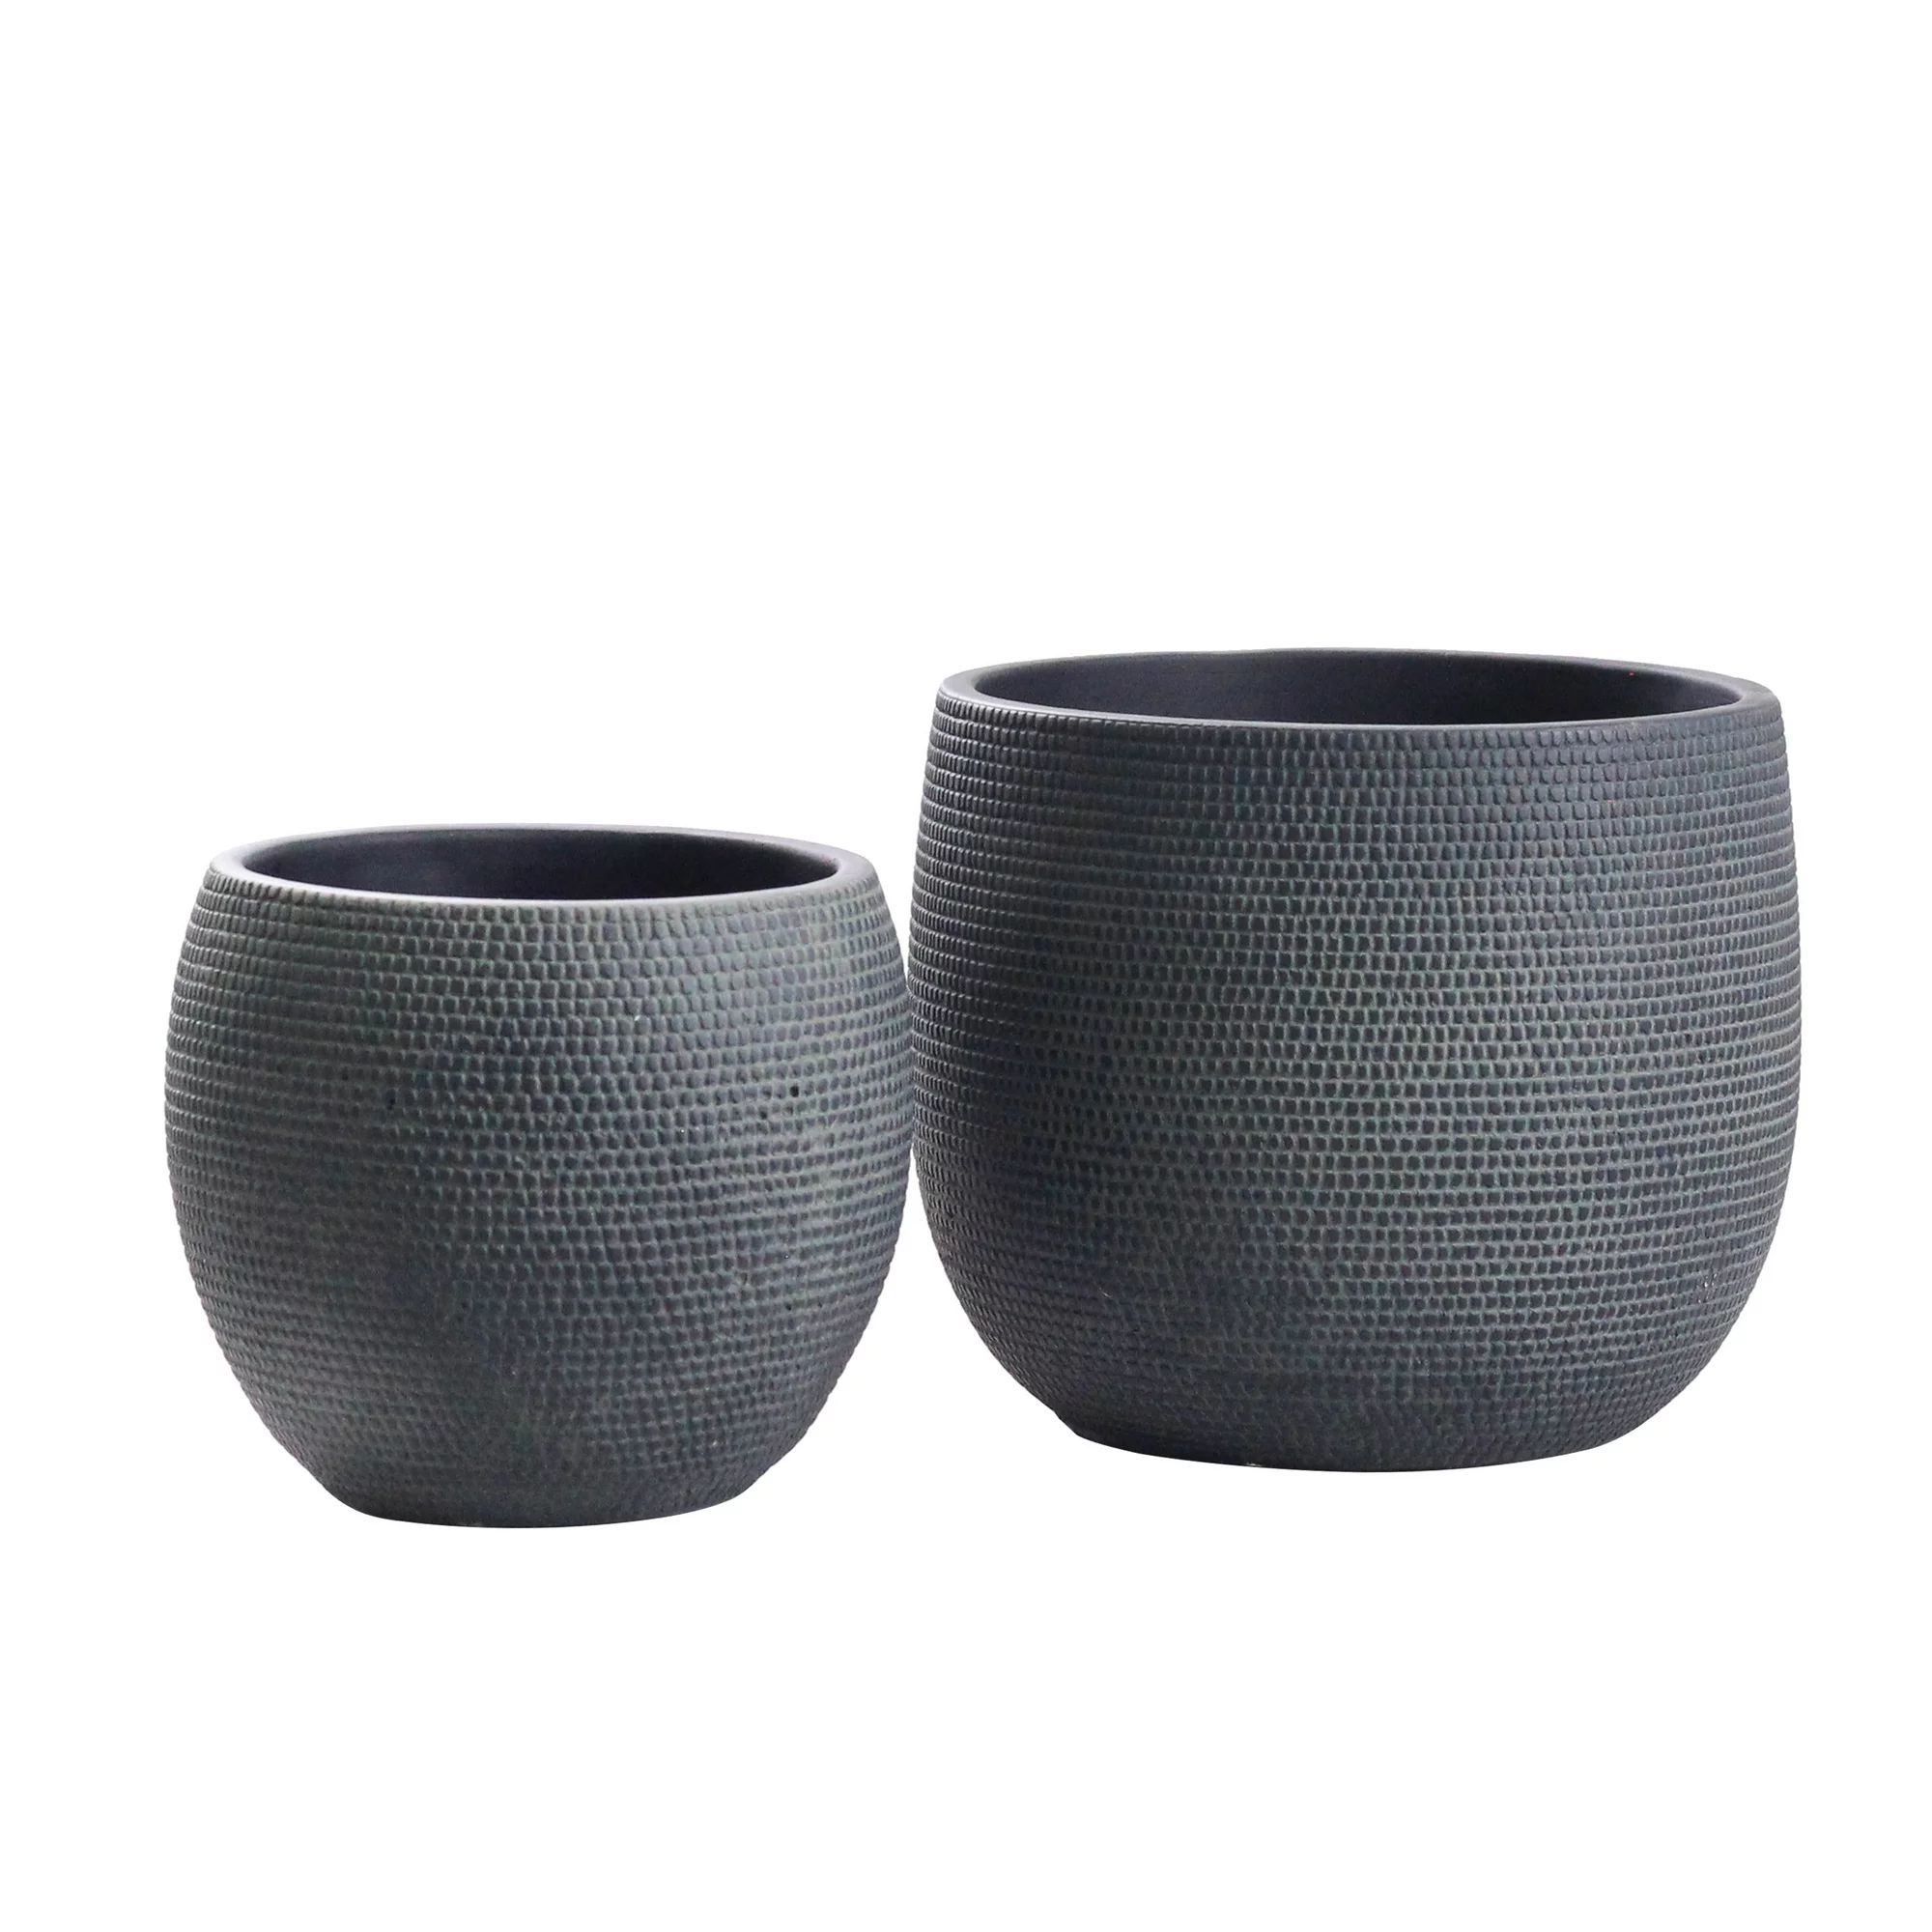 Olly & Rose Barcelona Ceramic Plant Pot Set 2 - Indoor & Outdoor Planters (Black) | Walmart (US)